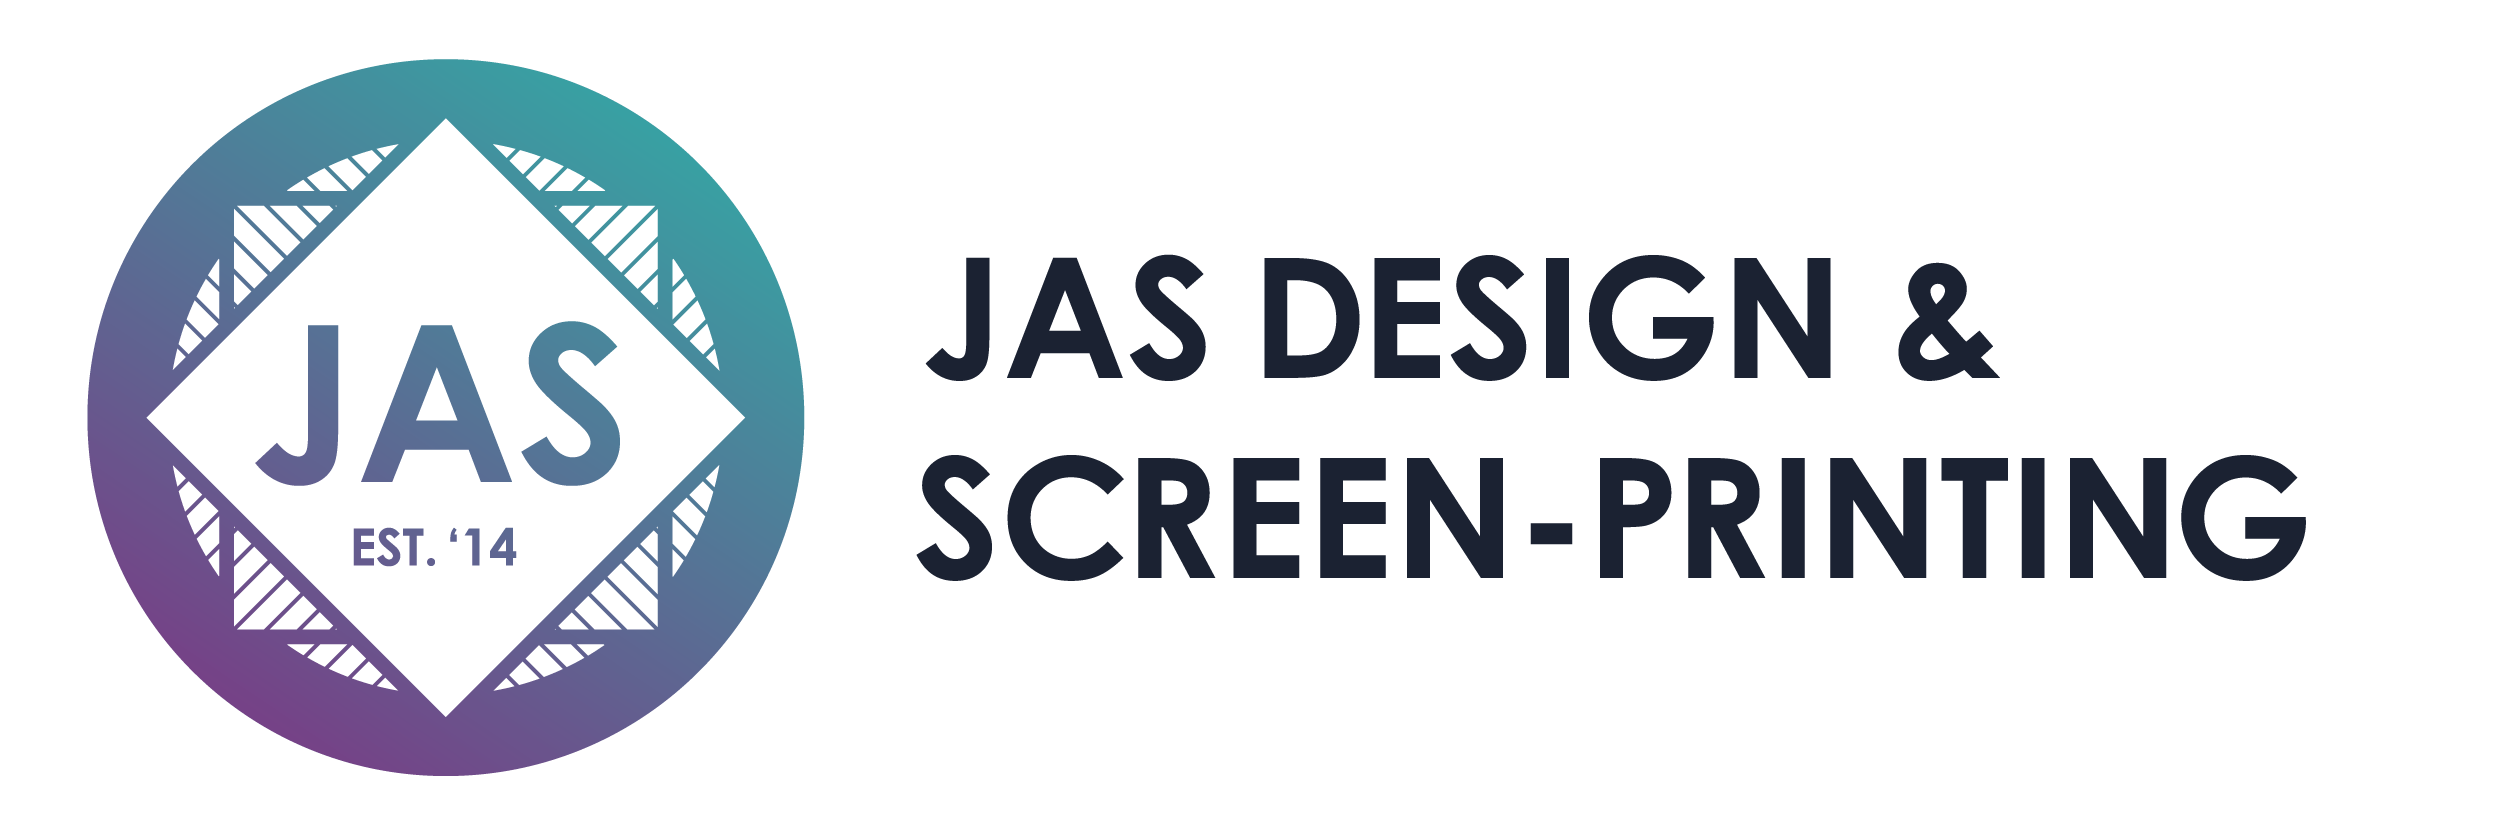 JAS Design & Screen-Printing Studio